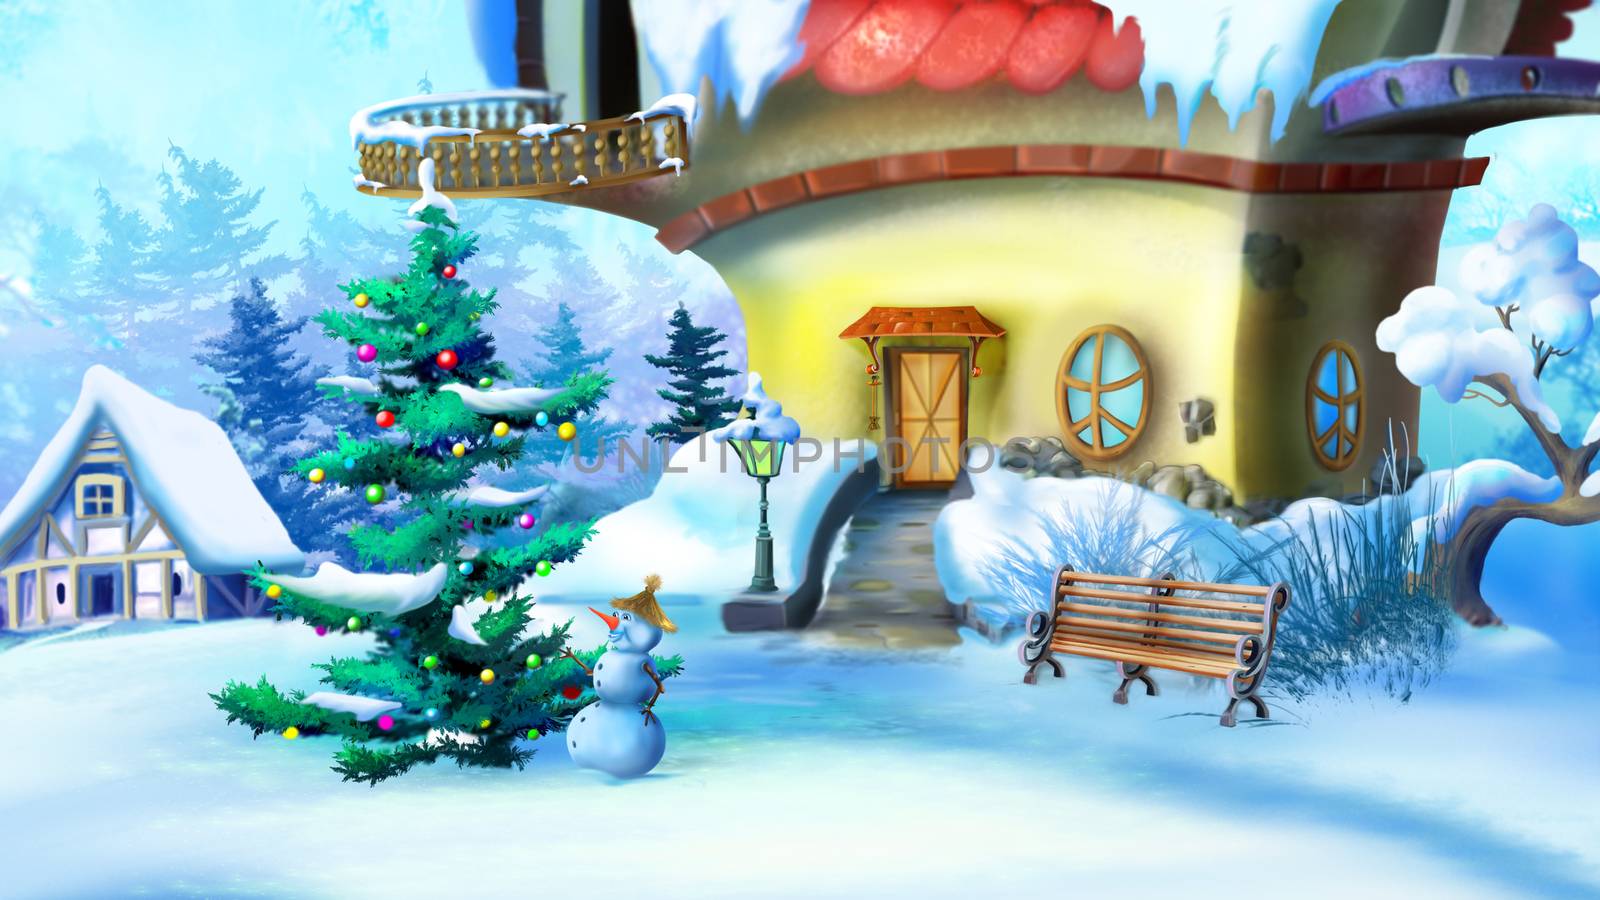 Christmas Tree and Snowman Near a Fairy Tale House by Multipedia